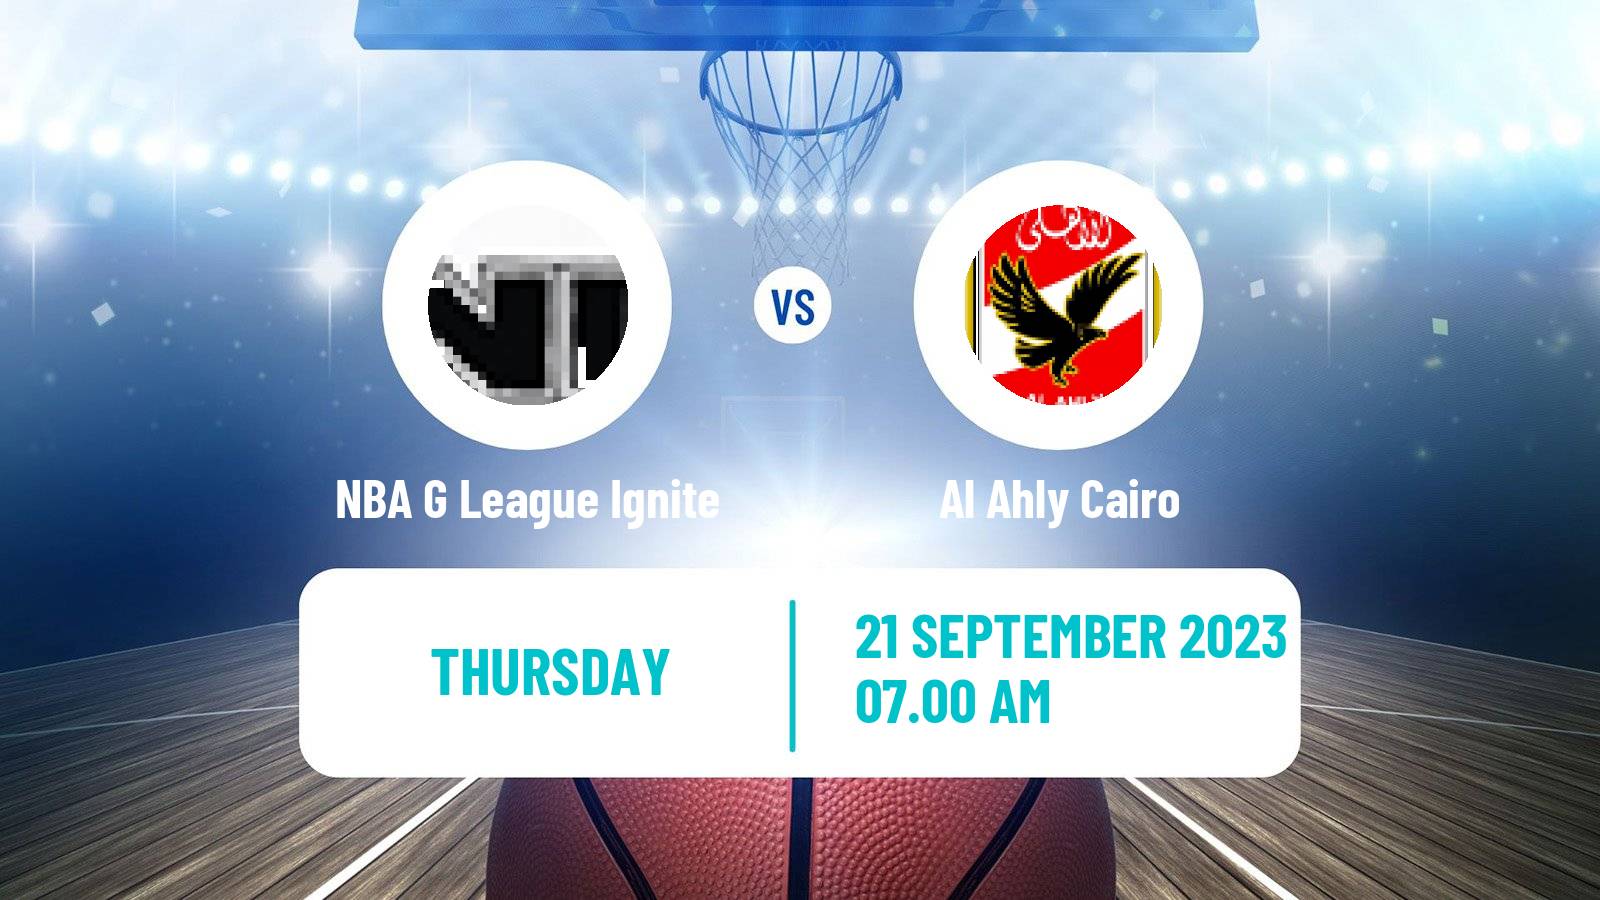 Basketball Basketball Intercontinental Cup NBA G League Ignite - Al Ahly Cairo